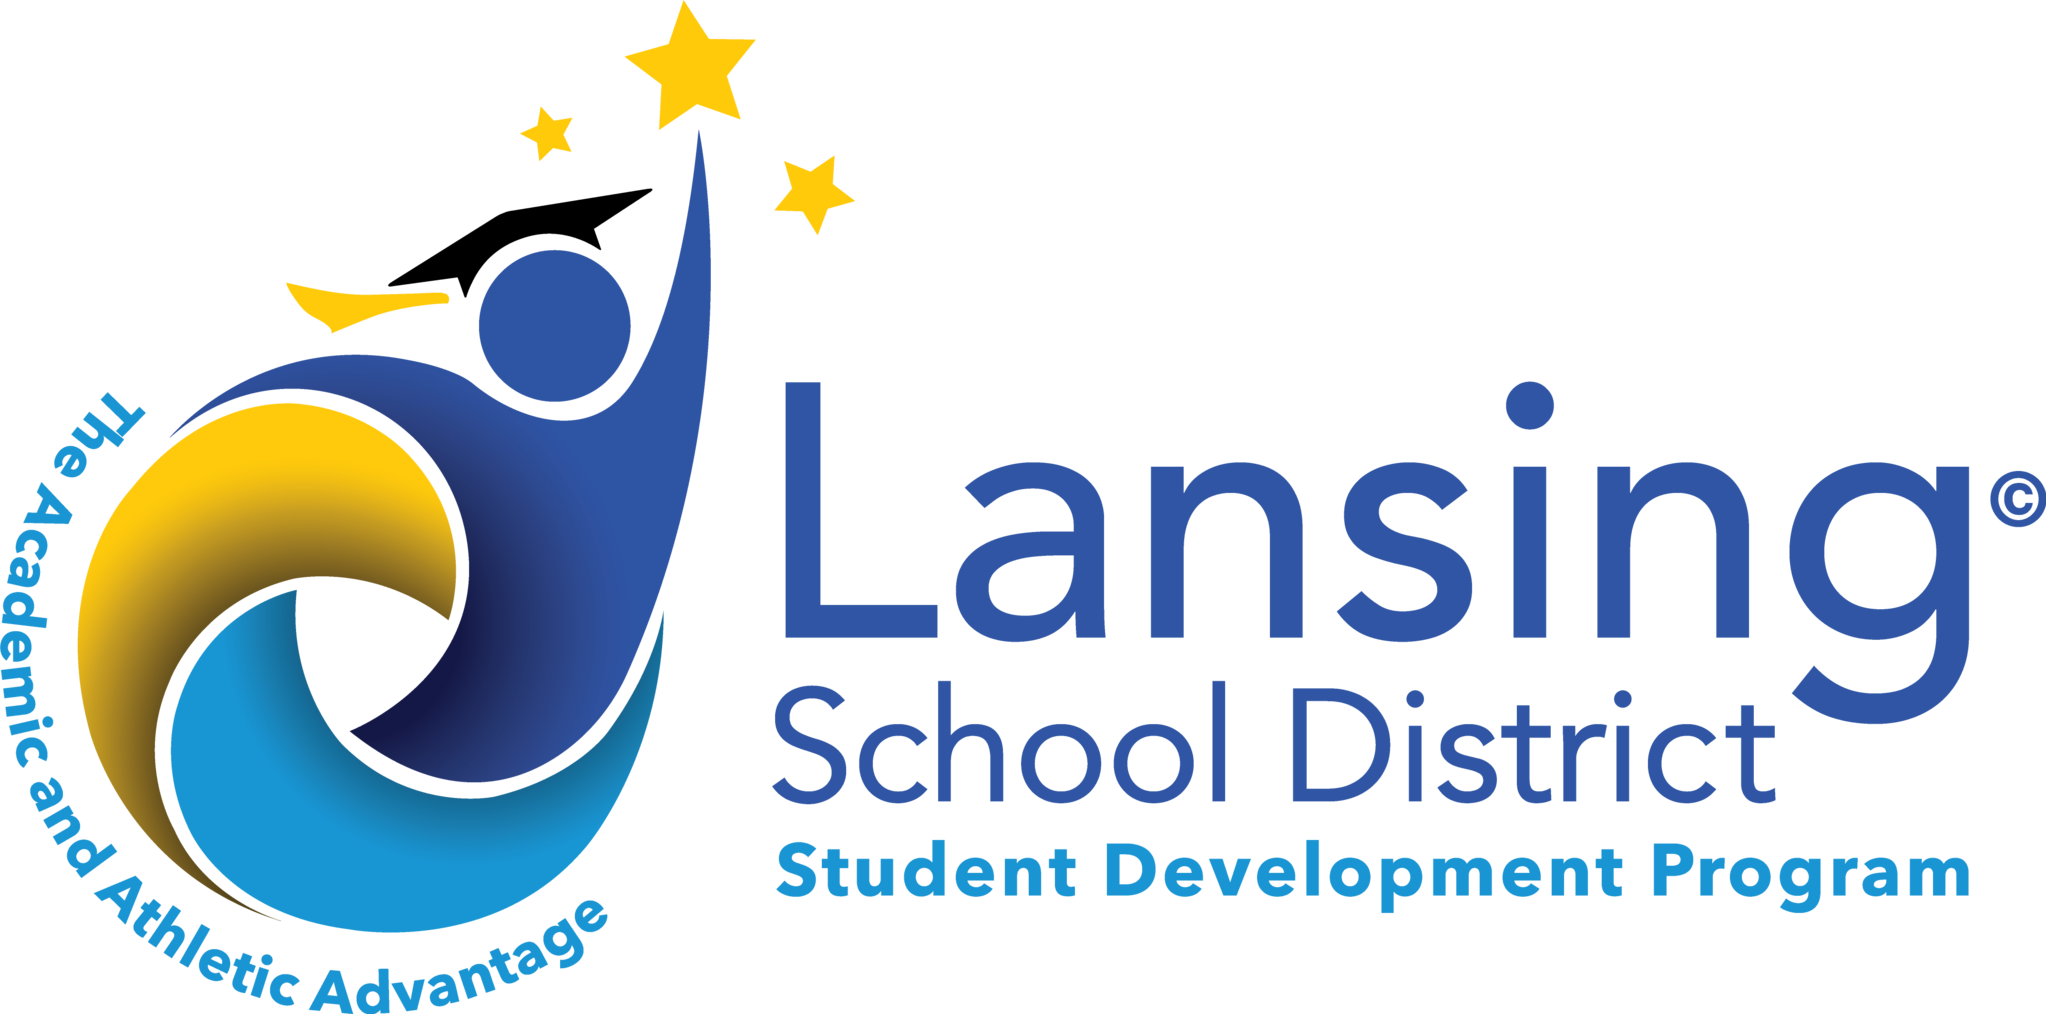 Student Development Program Logo